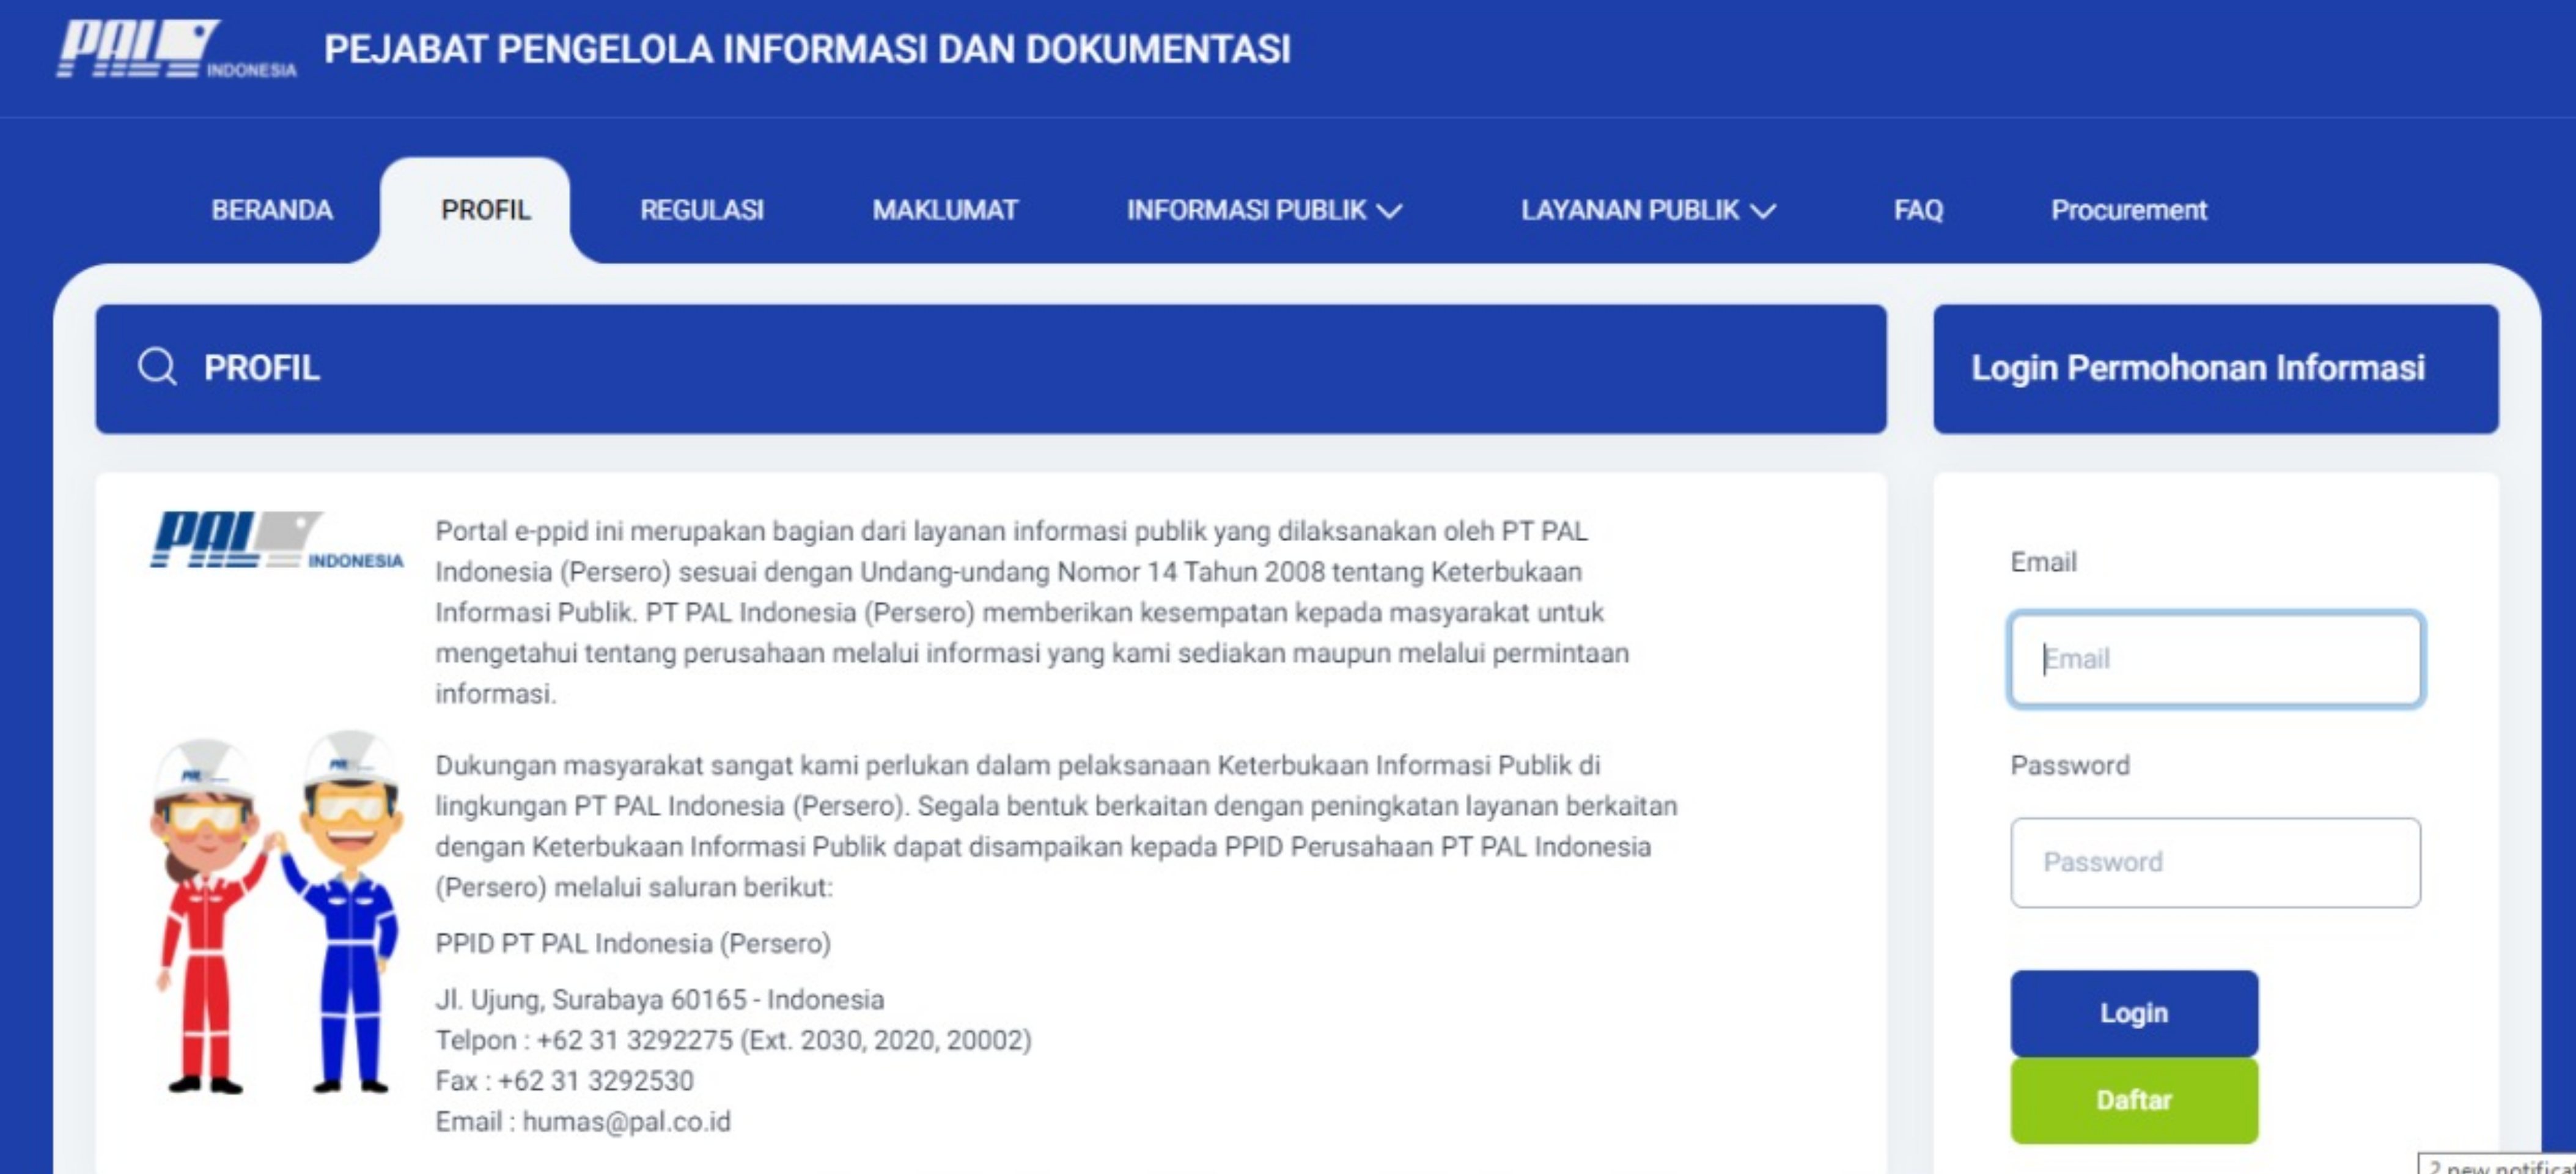 Halaman Utama e-PPID PT PAL Indonesia (Persero)